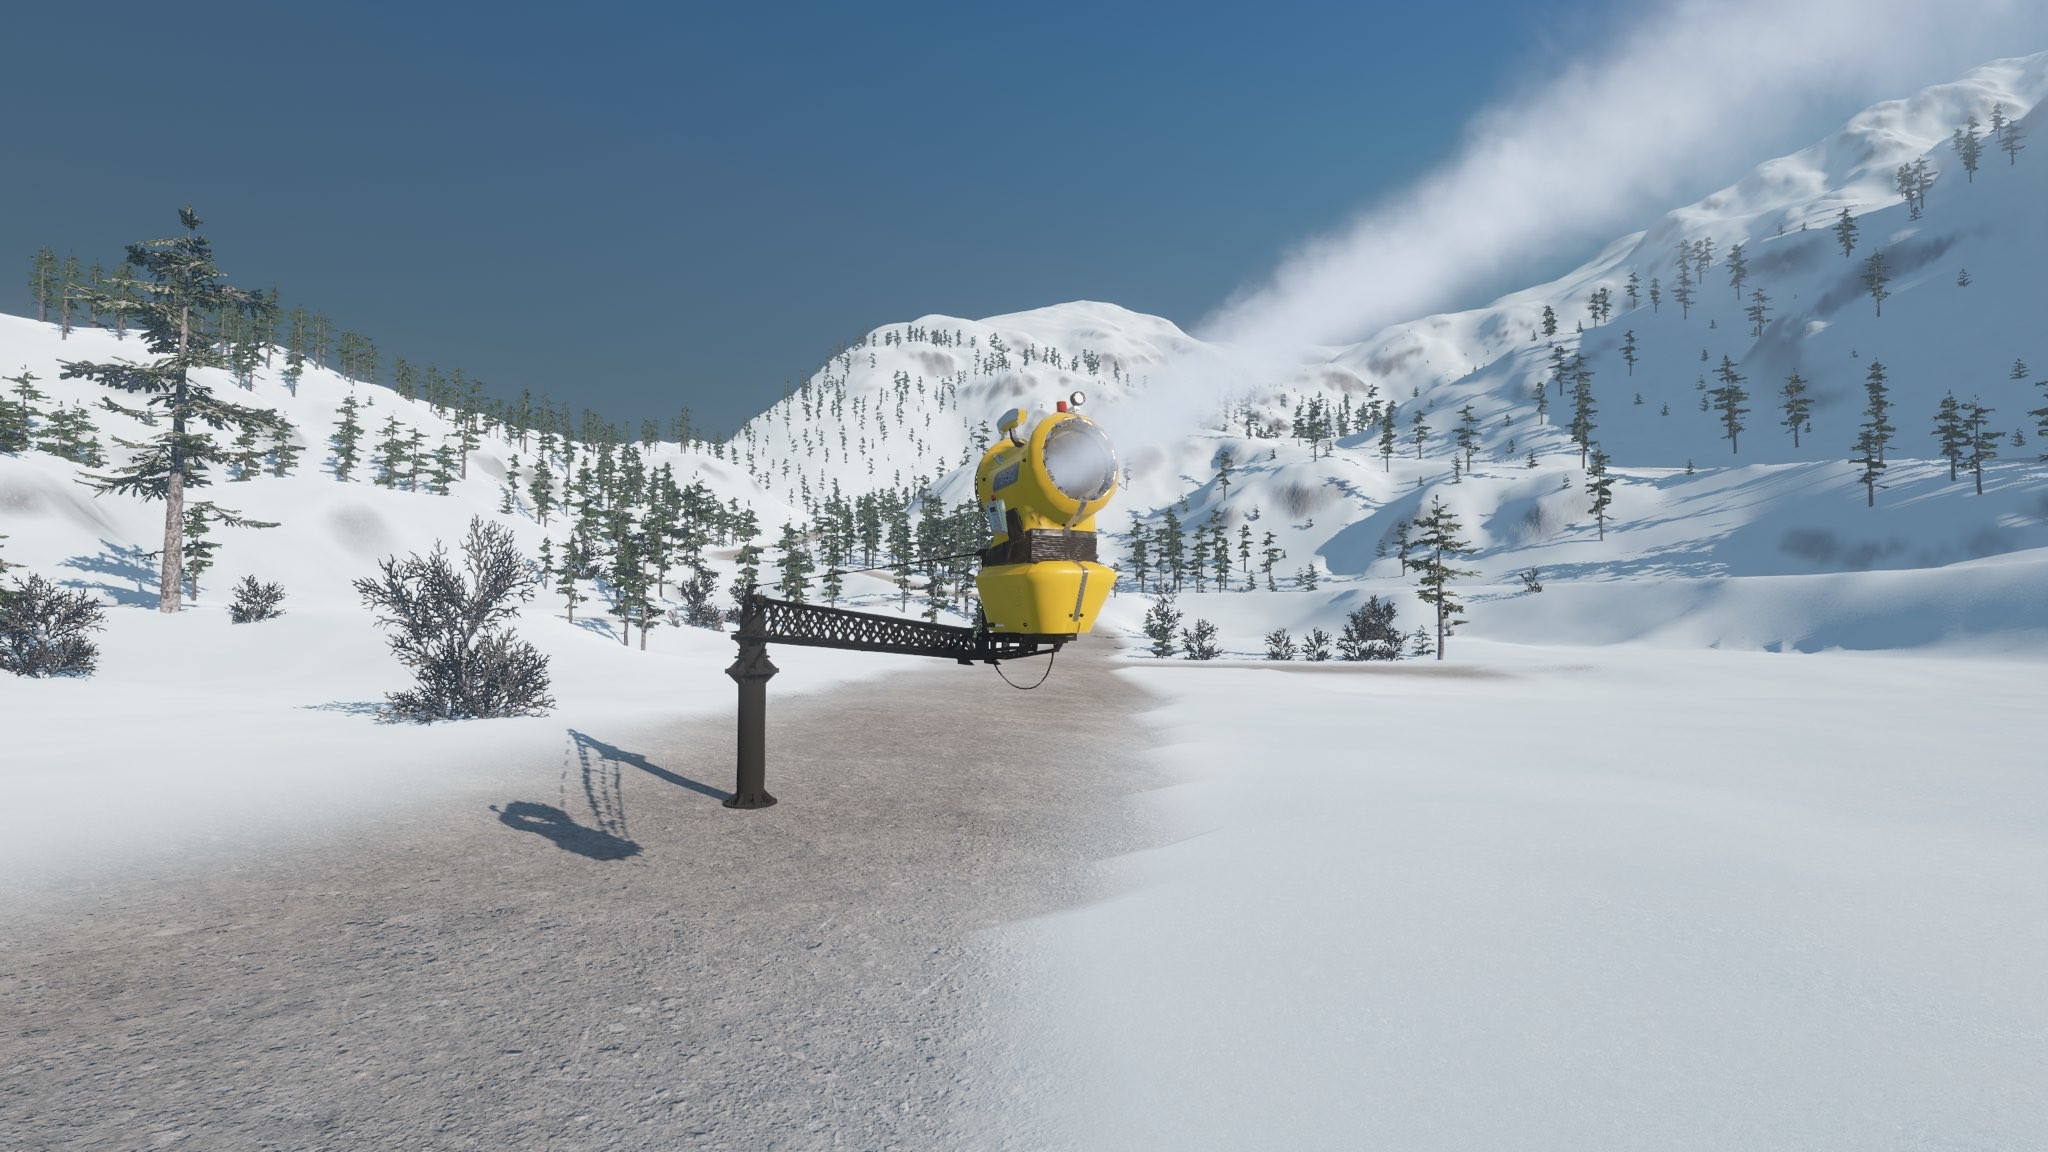 Winter Resort Simulator - TechnoAlpin - Snow Expert Pack screenshot